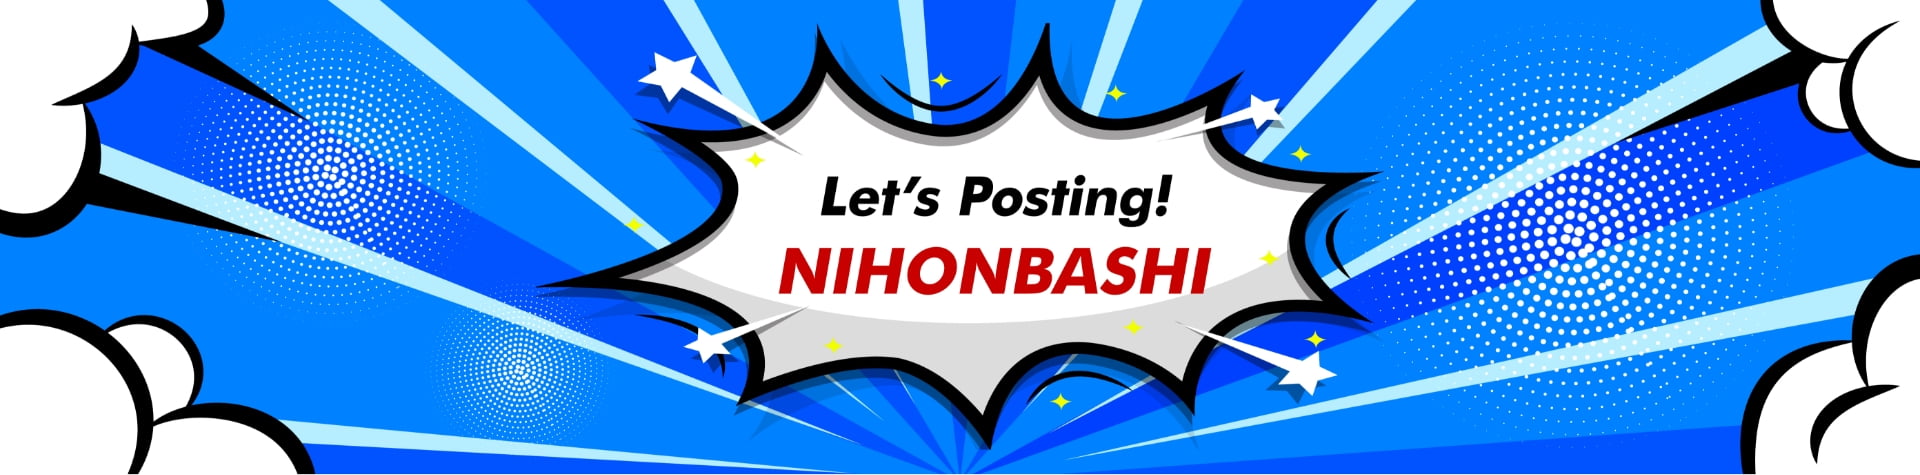 Let's Posting! -nihonbashi-